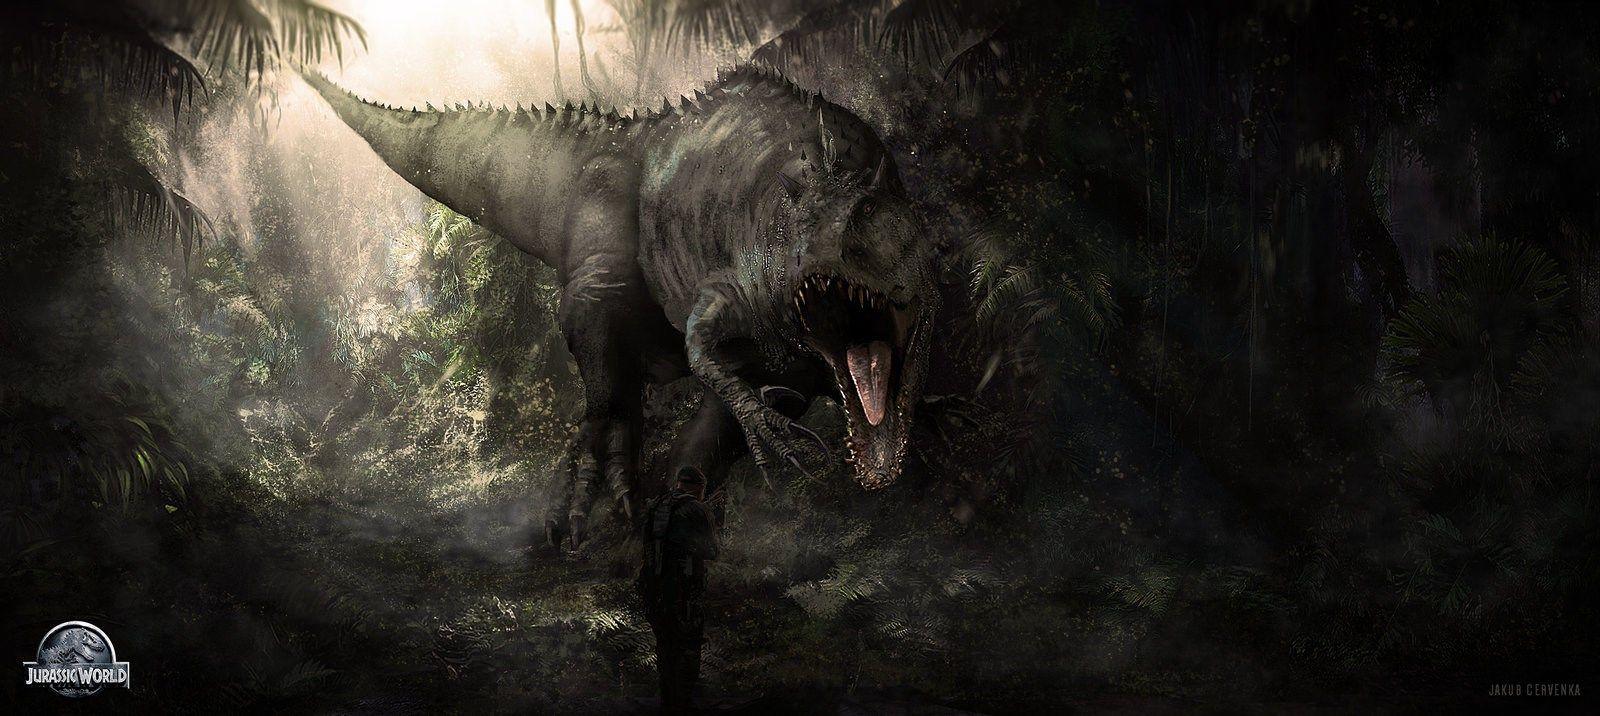 Featured image of post Jurassic Park T Rex Wallpaper Iphone Jurassic world 2015 dinosaurs desktop iphone 6 wallpapers hd